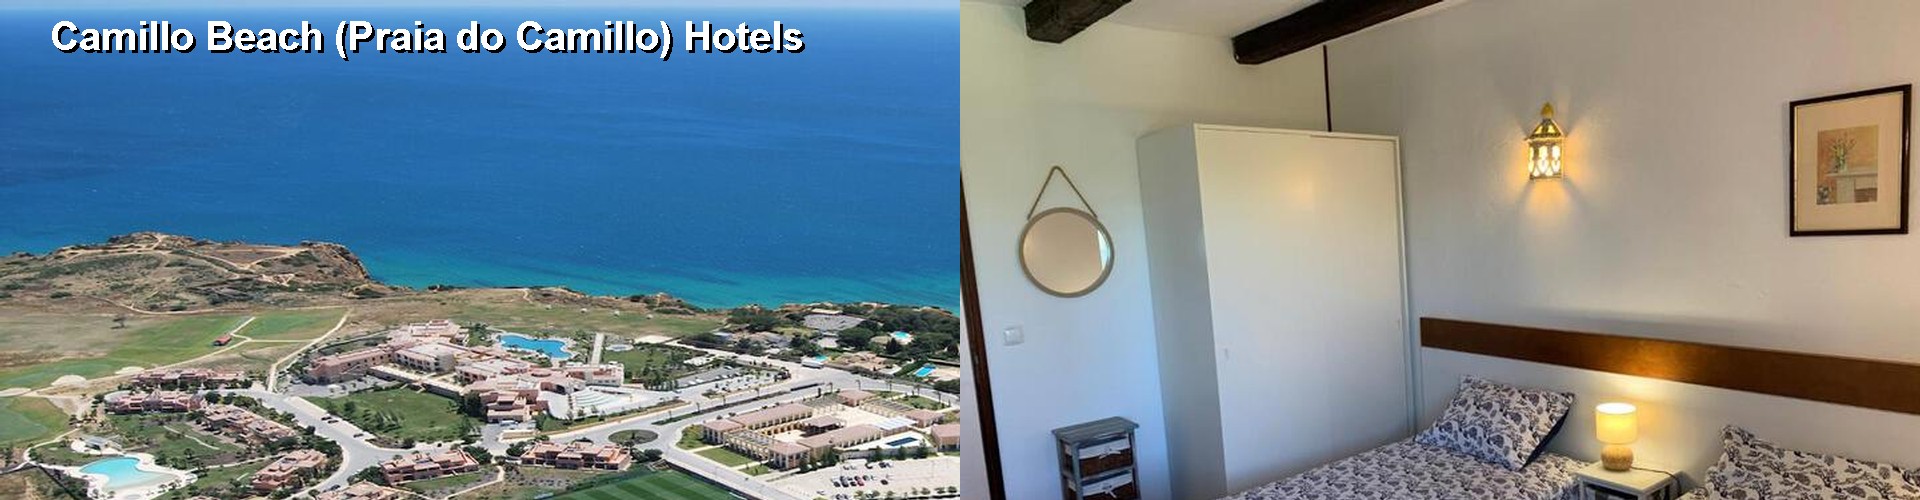 5 Best Hotels near Camillo Beach (Praia do Camillo)